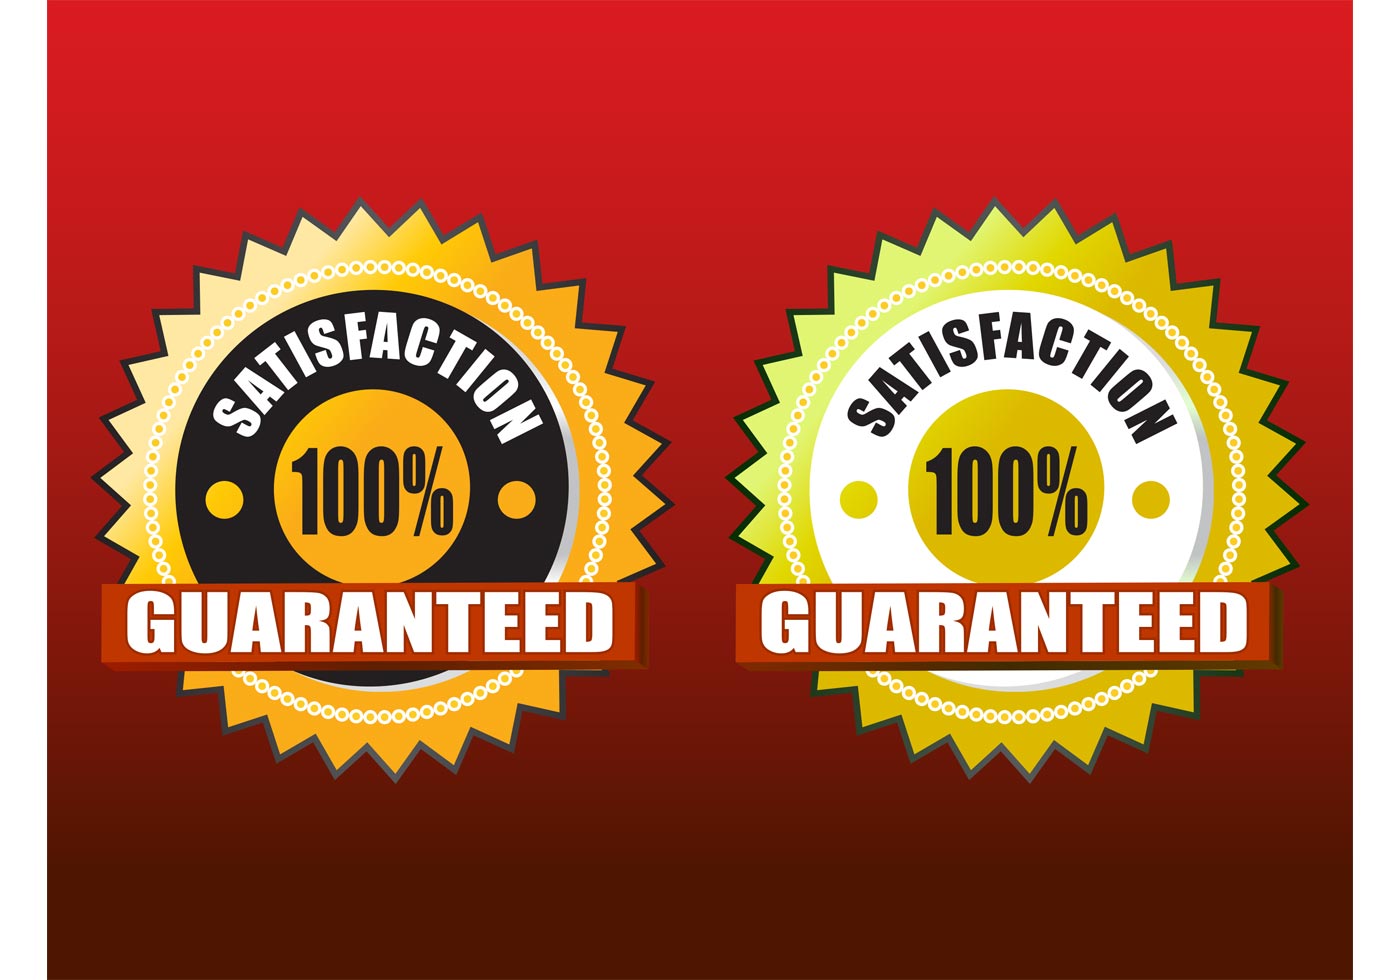 Satisfaction Guaranteed - Download Free Vector Art, Stock Graphics & Images